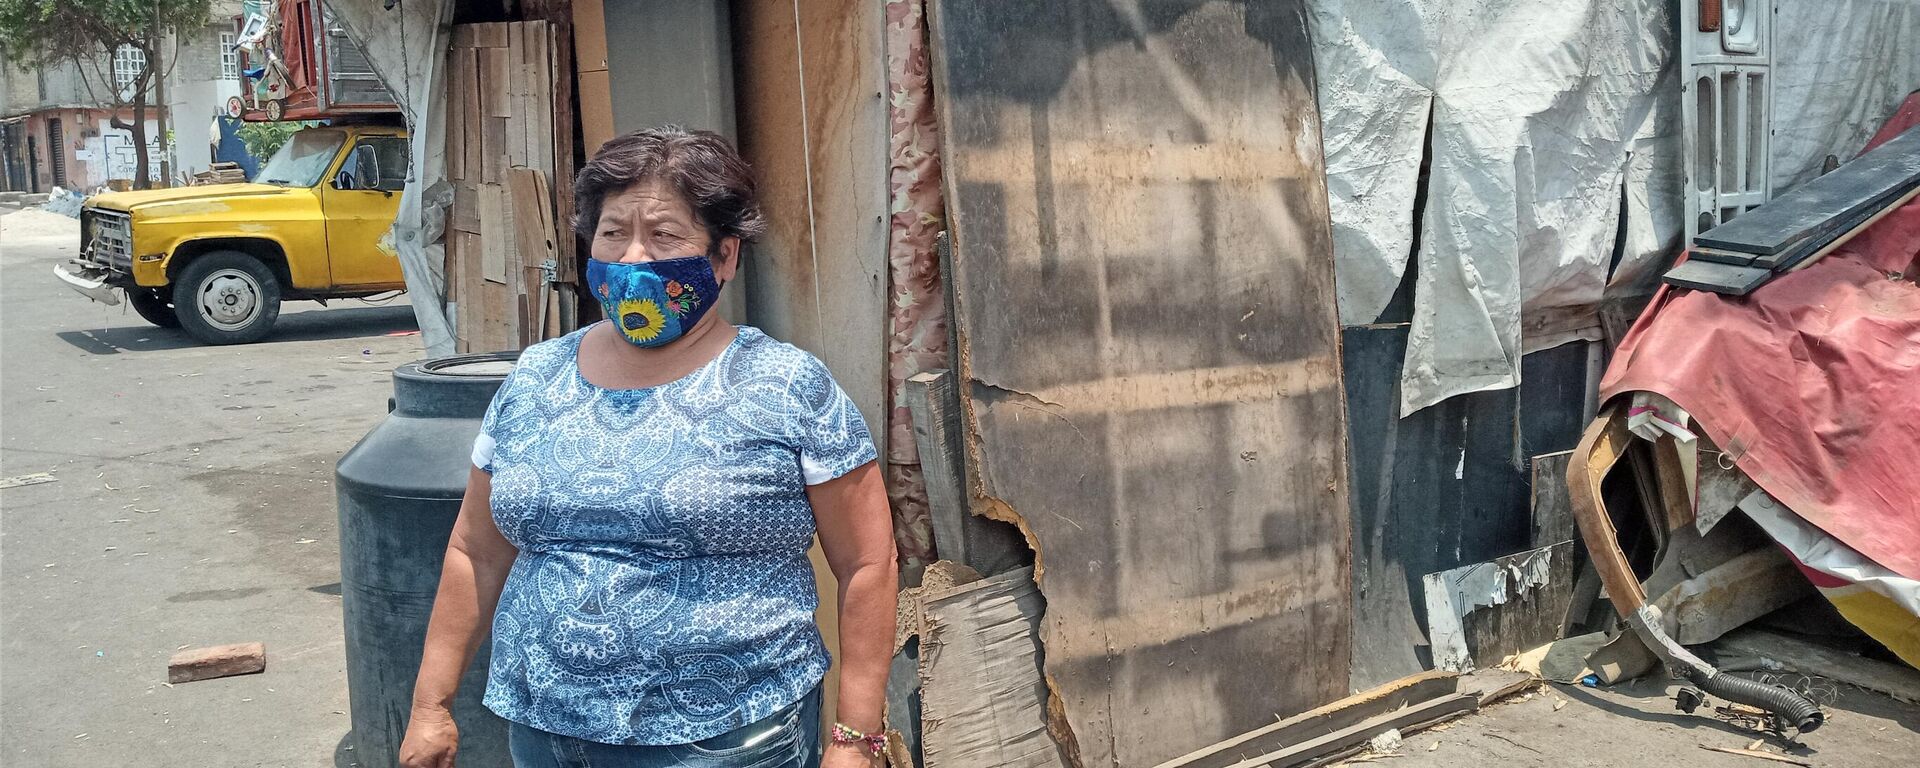 Luisa Aguirre damnificada del sismo de 2017 posa para foto, sigue sin poder volver a casa - Sputnik Mundo, 1920, 19.09.2021